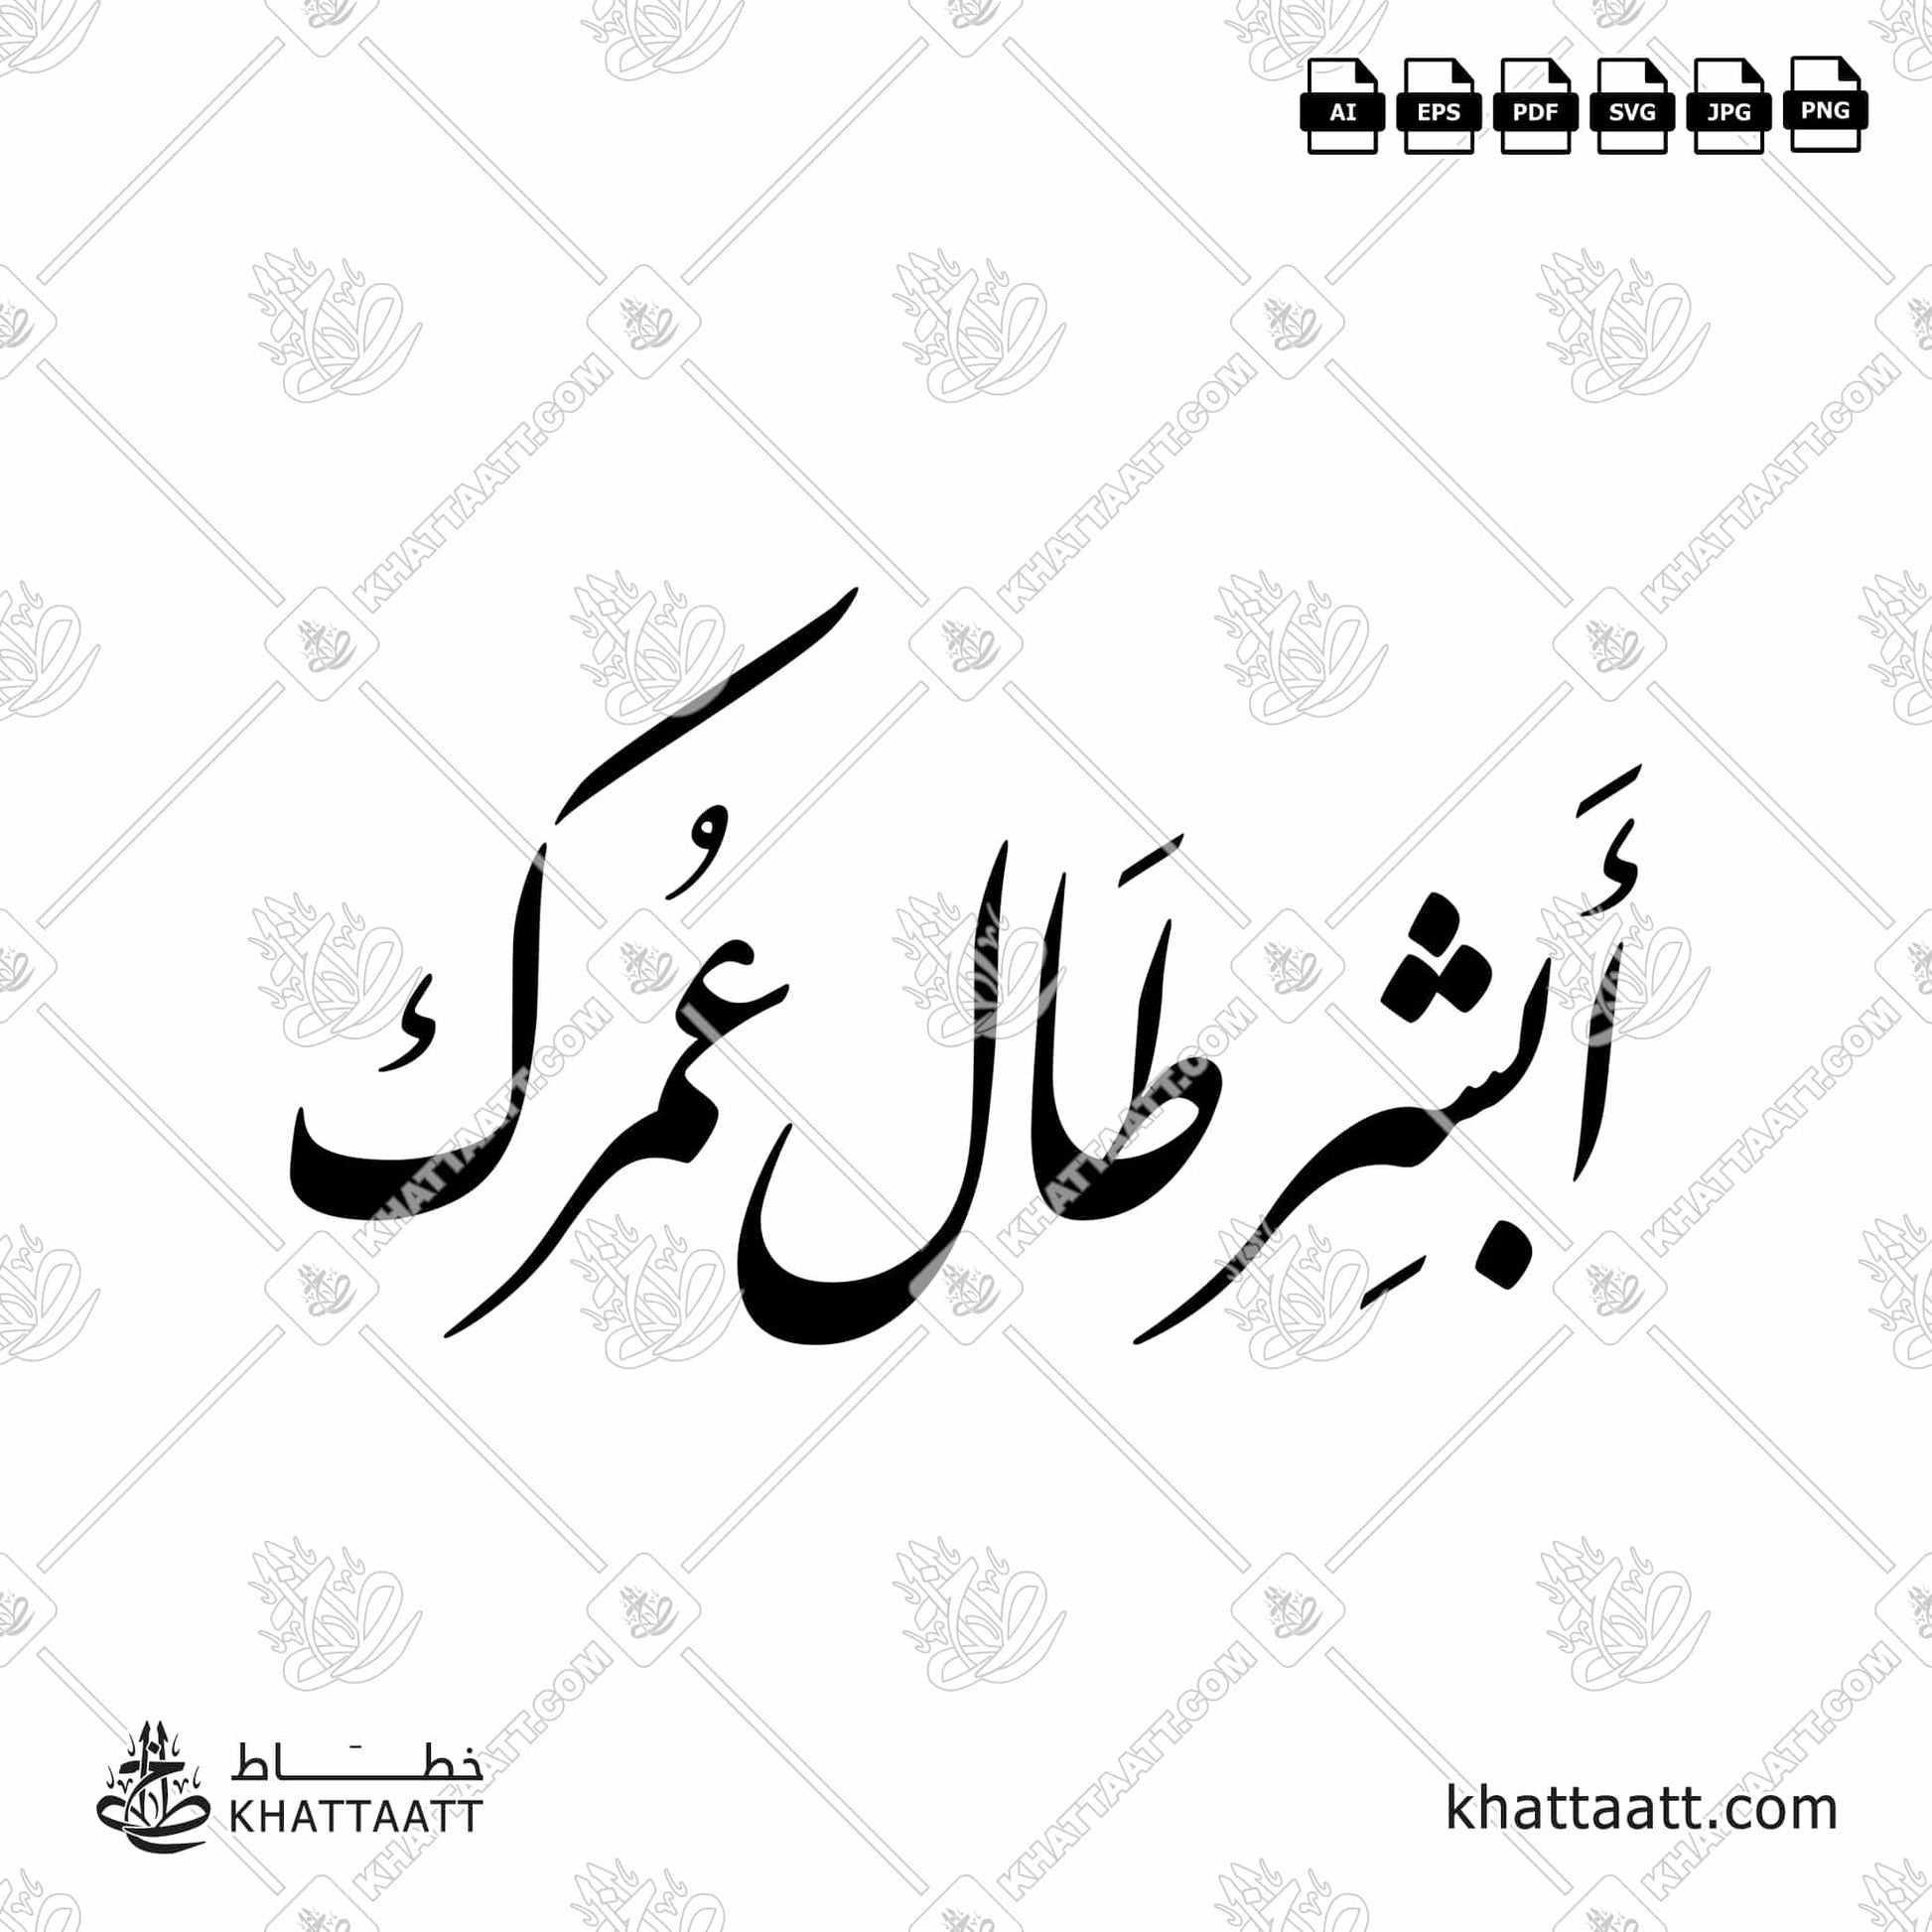 Arabic Calligraphy of أبشر طال عمرك in Farsi Script الخط الفارسي.